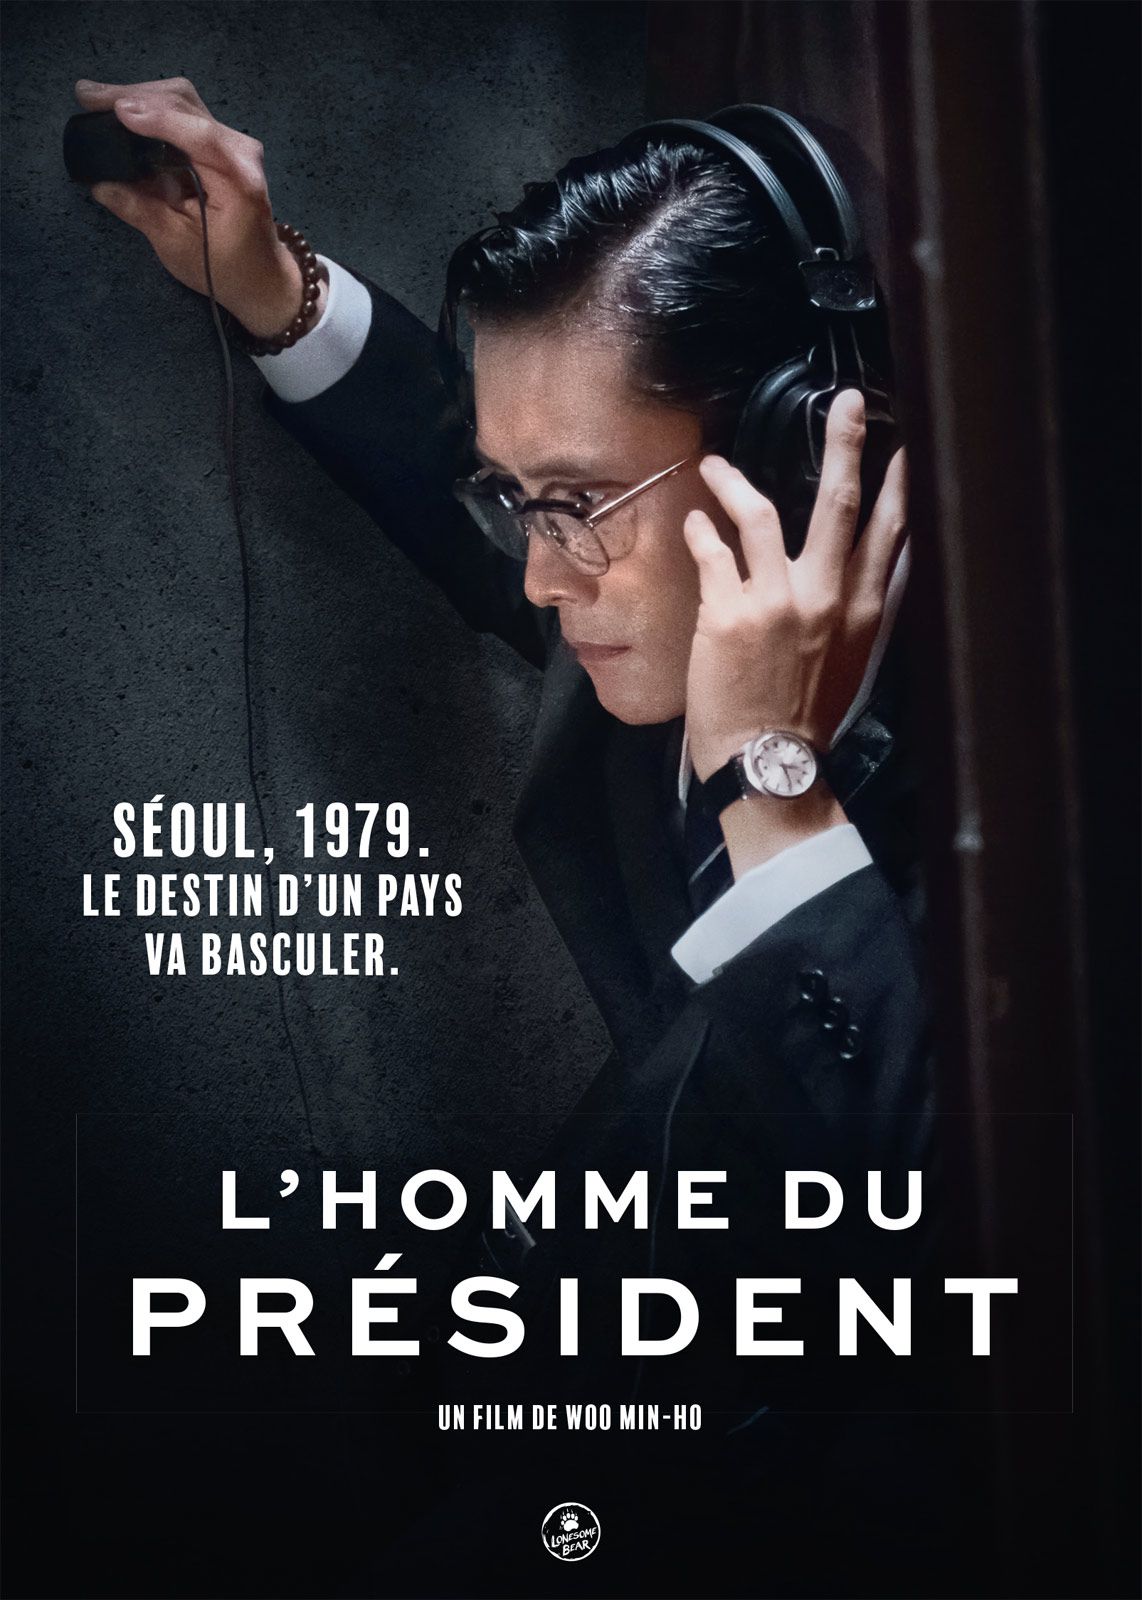 L'Homme du président - Film (2020) streaming VF gratuit complet